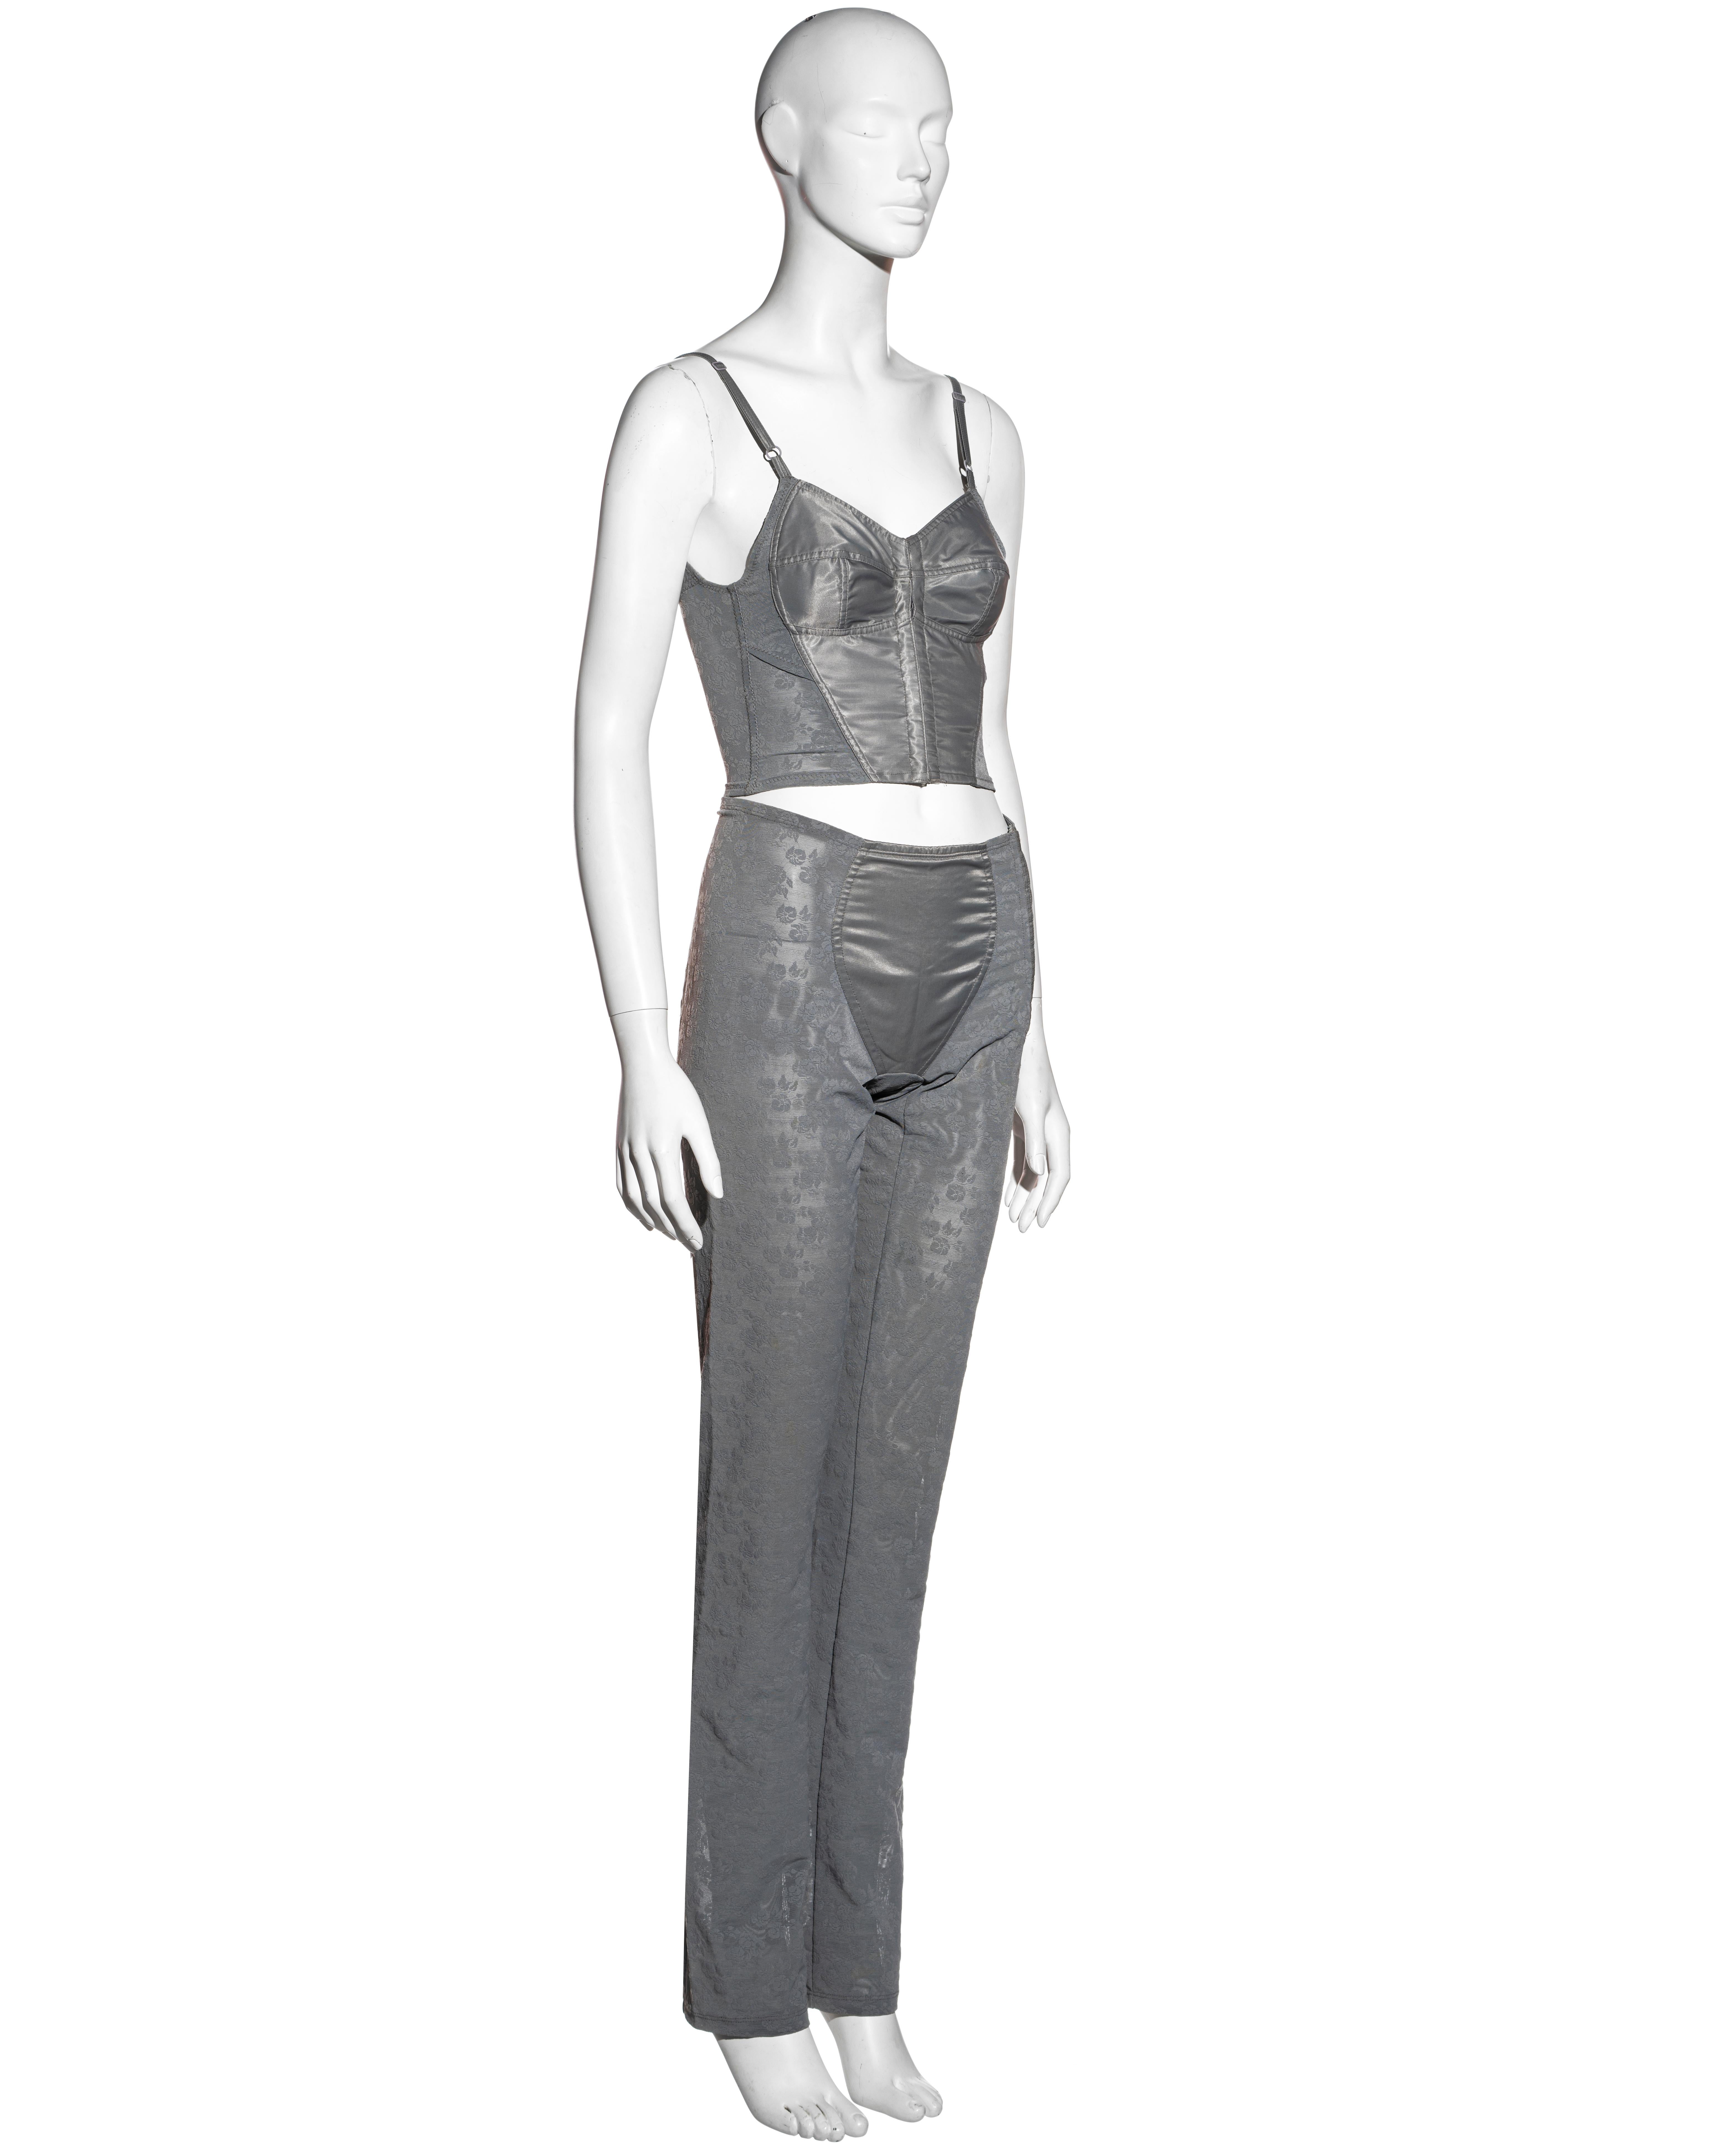 Gray Dolce & Gabbana grey floral jacquard mesh corset and pants set, c. 1996-1998